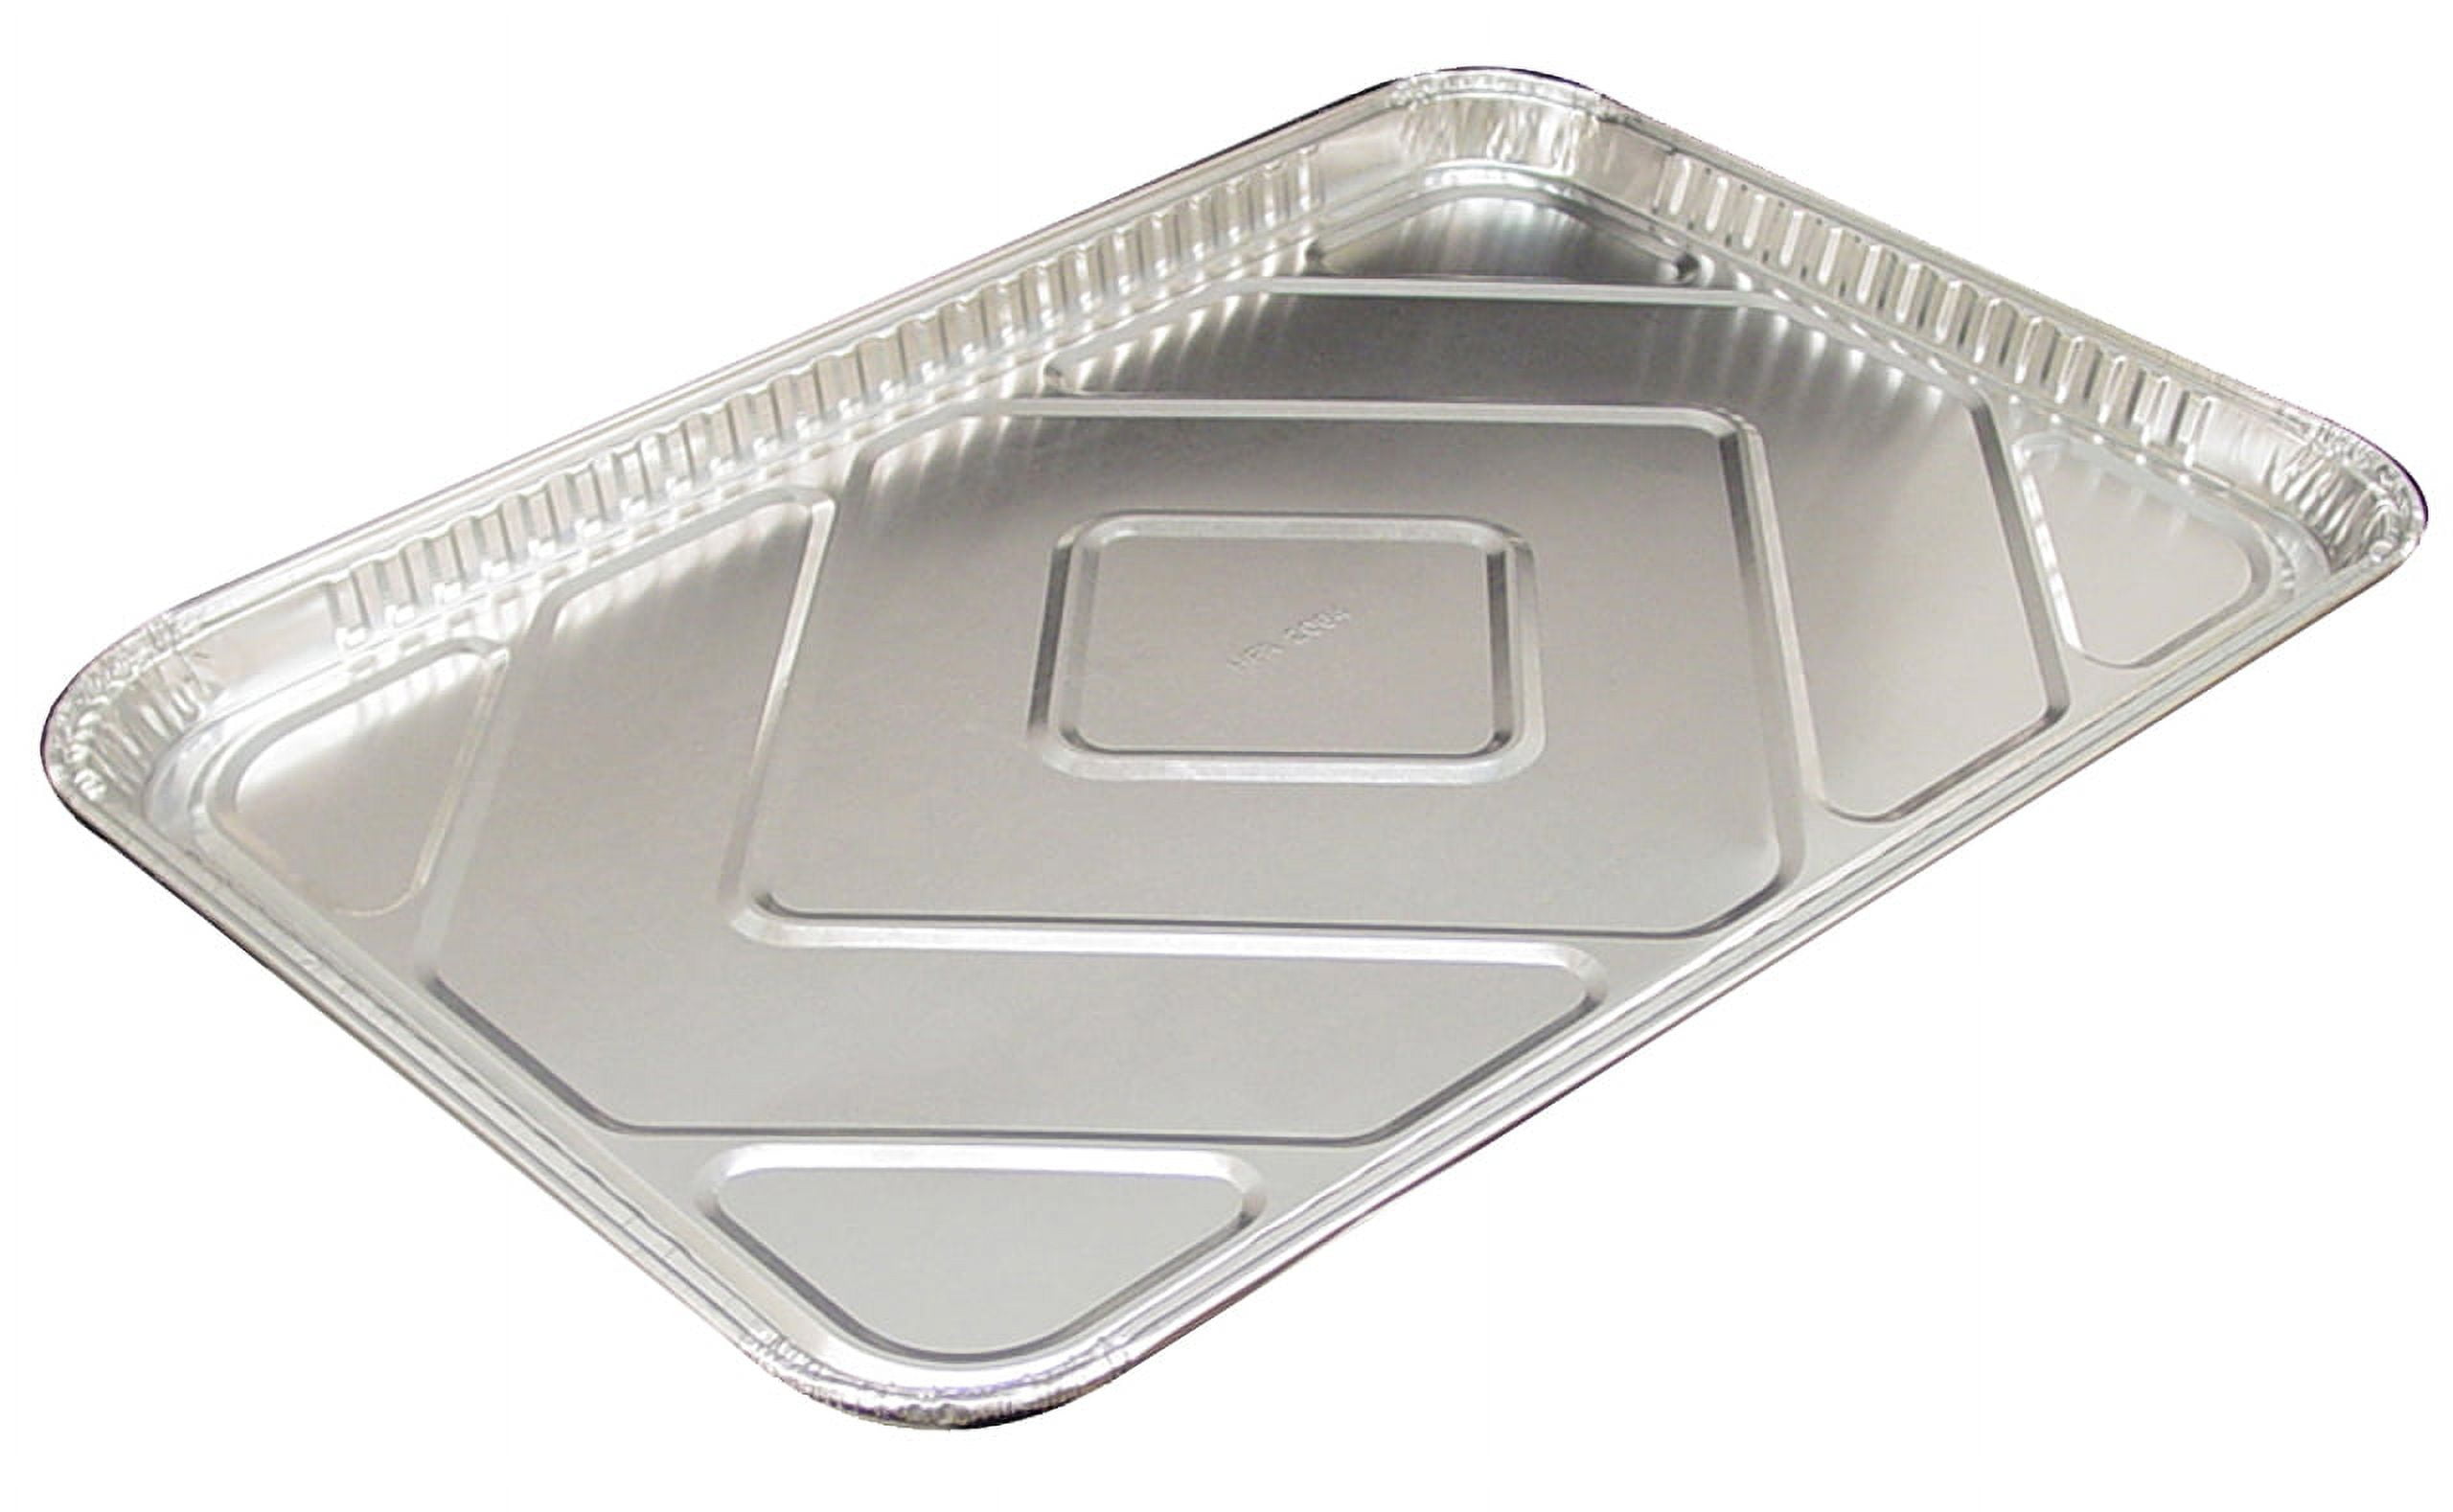  Handi-Foil 16x12 Oblong Cookie Sheet Pan Disposable Aluminum  Bun Tray (Pack of 10) : Home & Kitchen